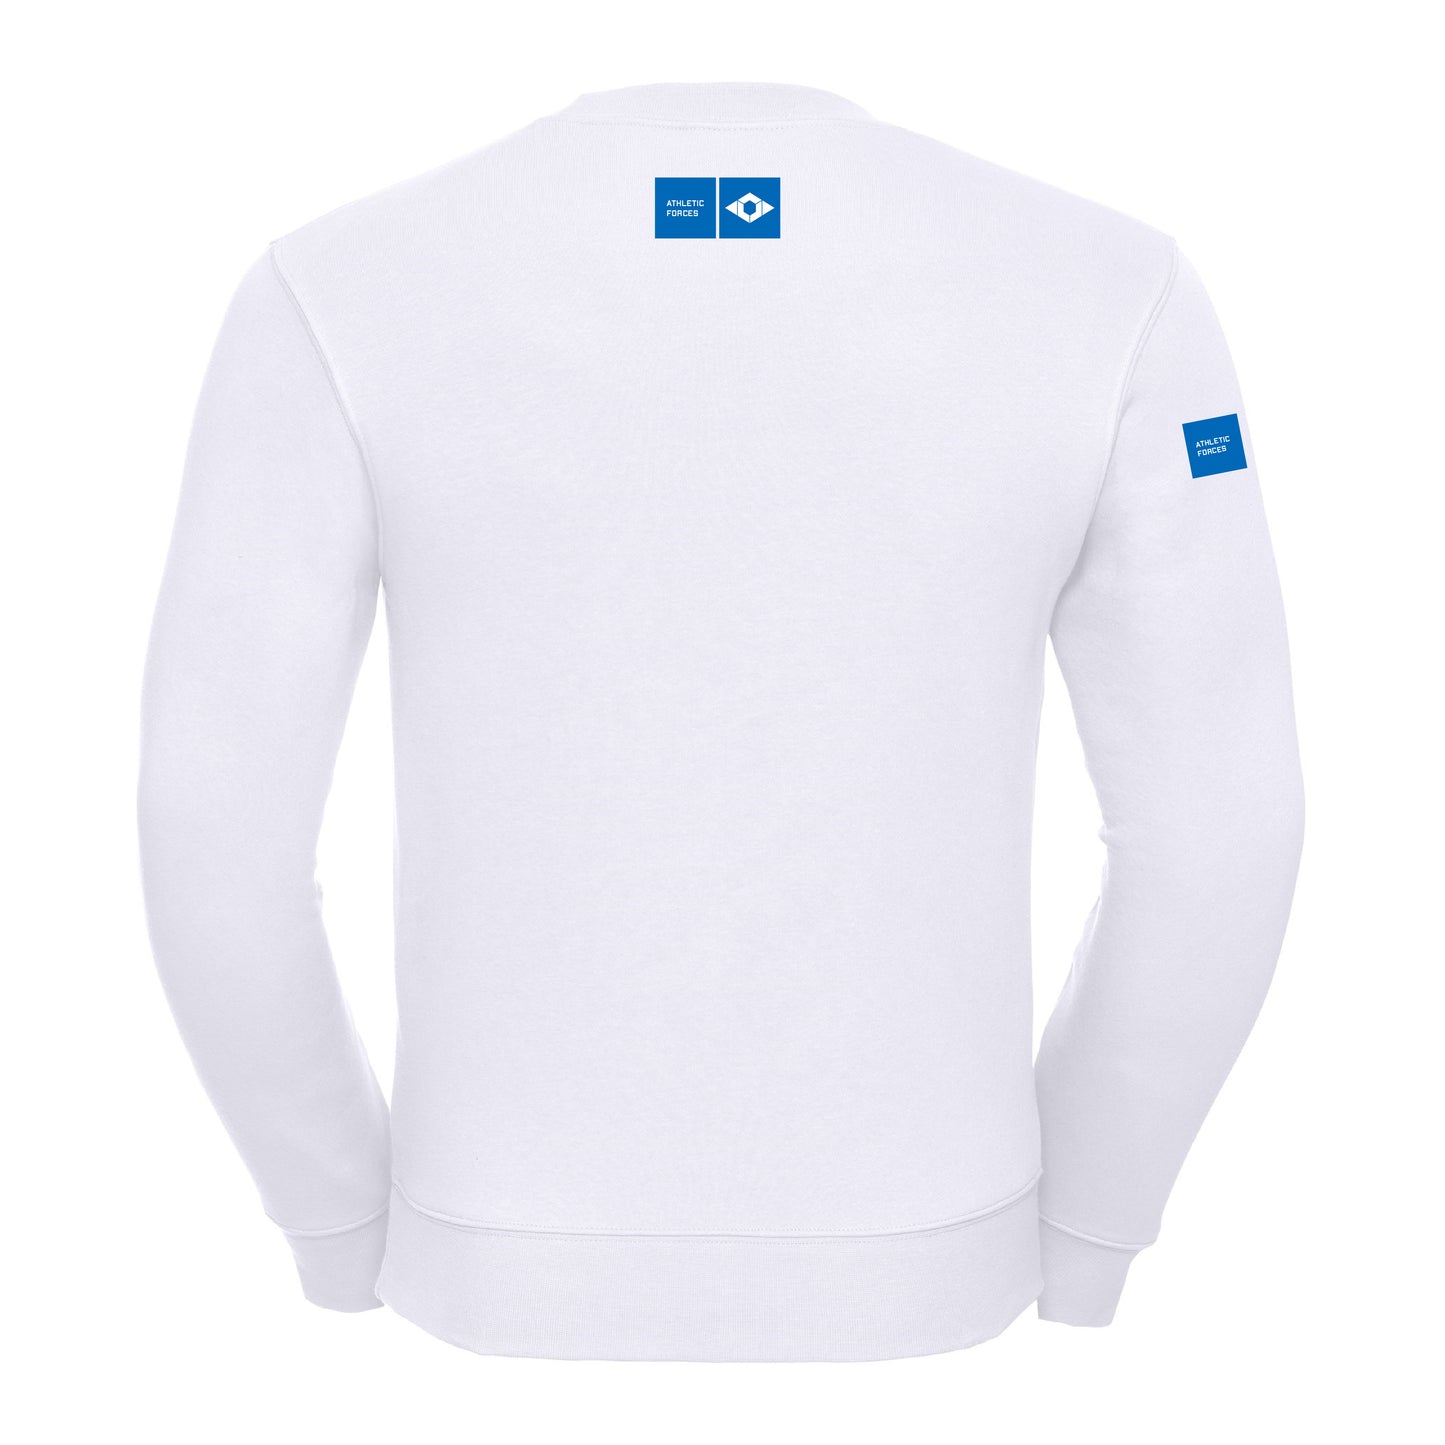 Union of Forces ® Sweatshirt